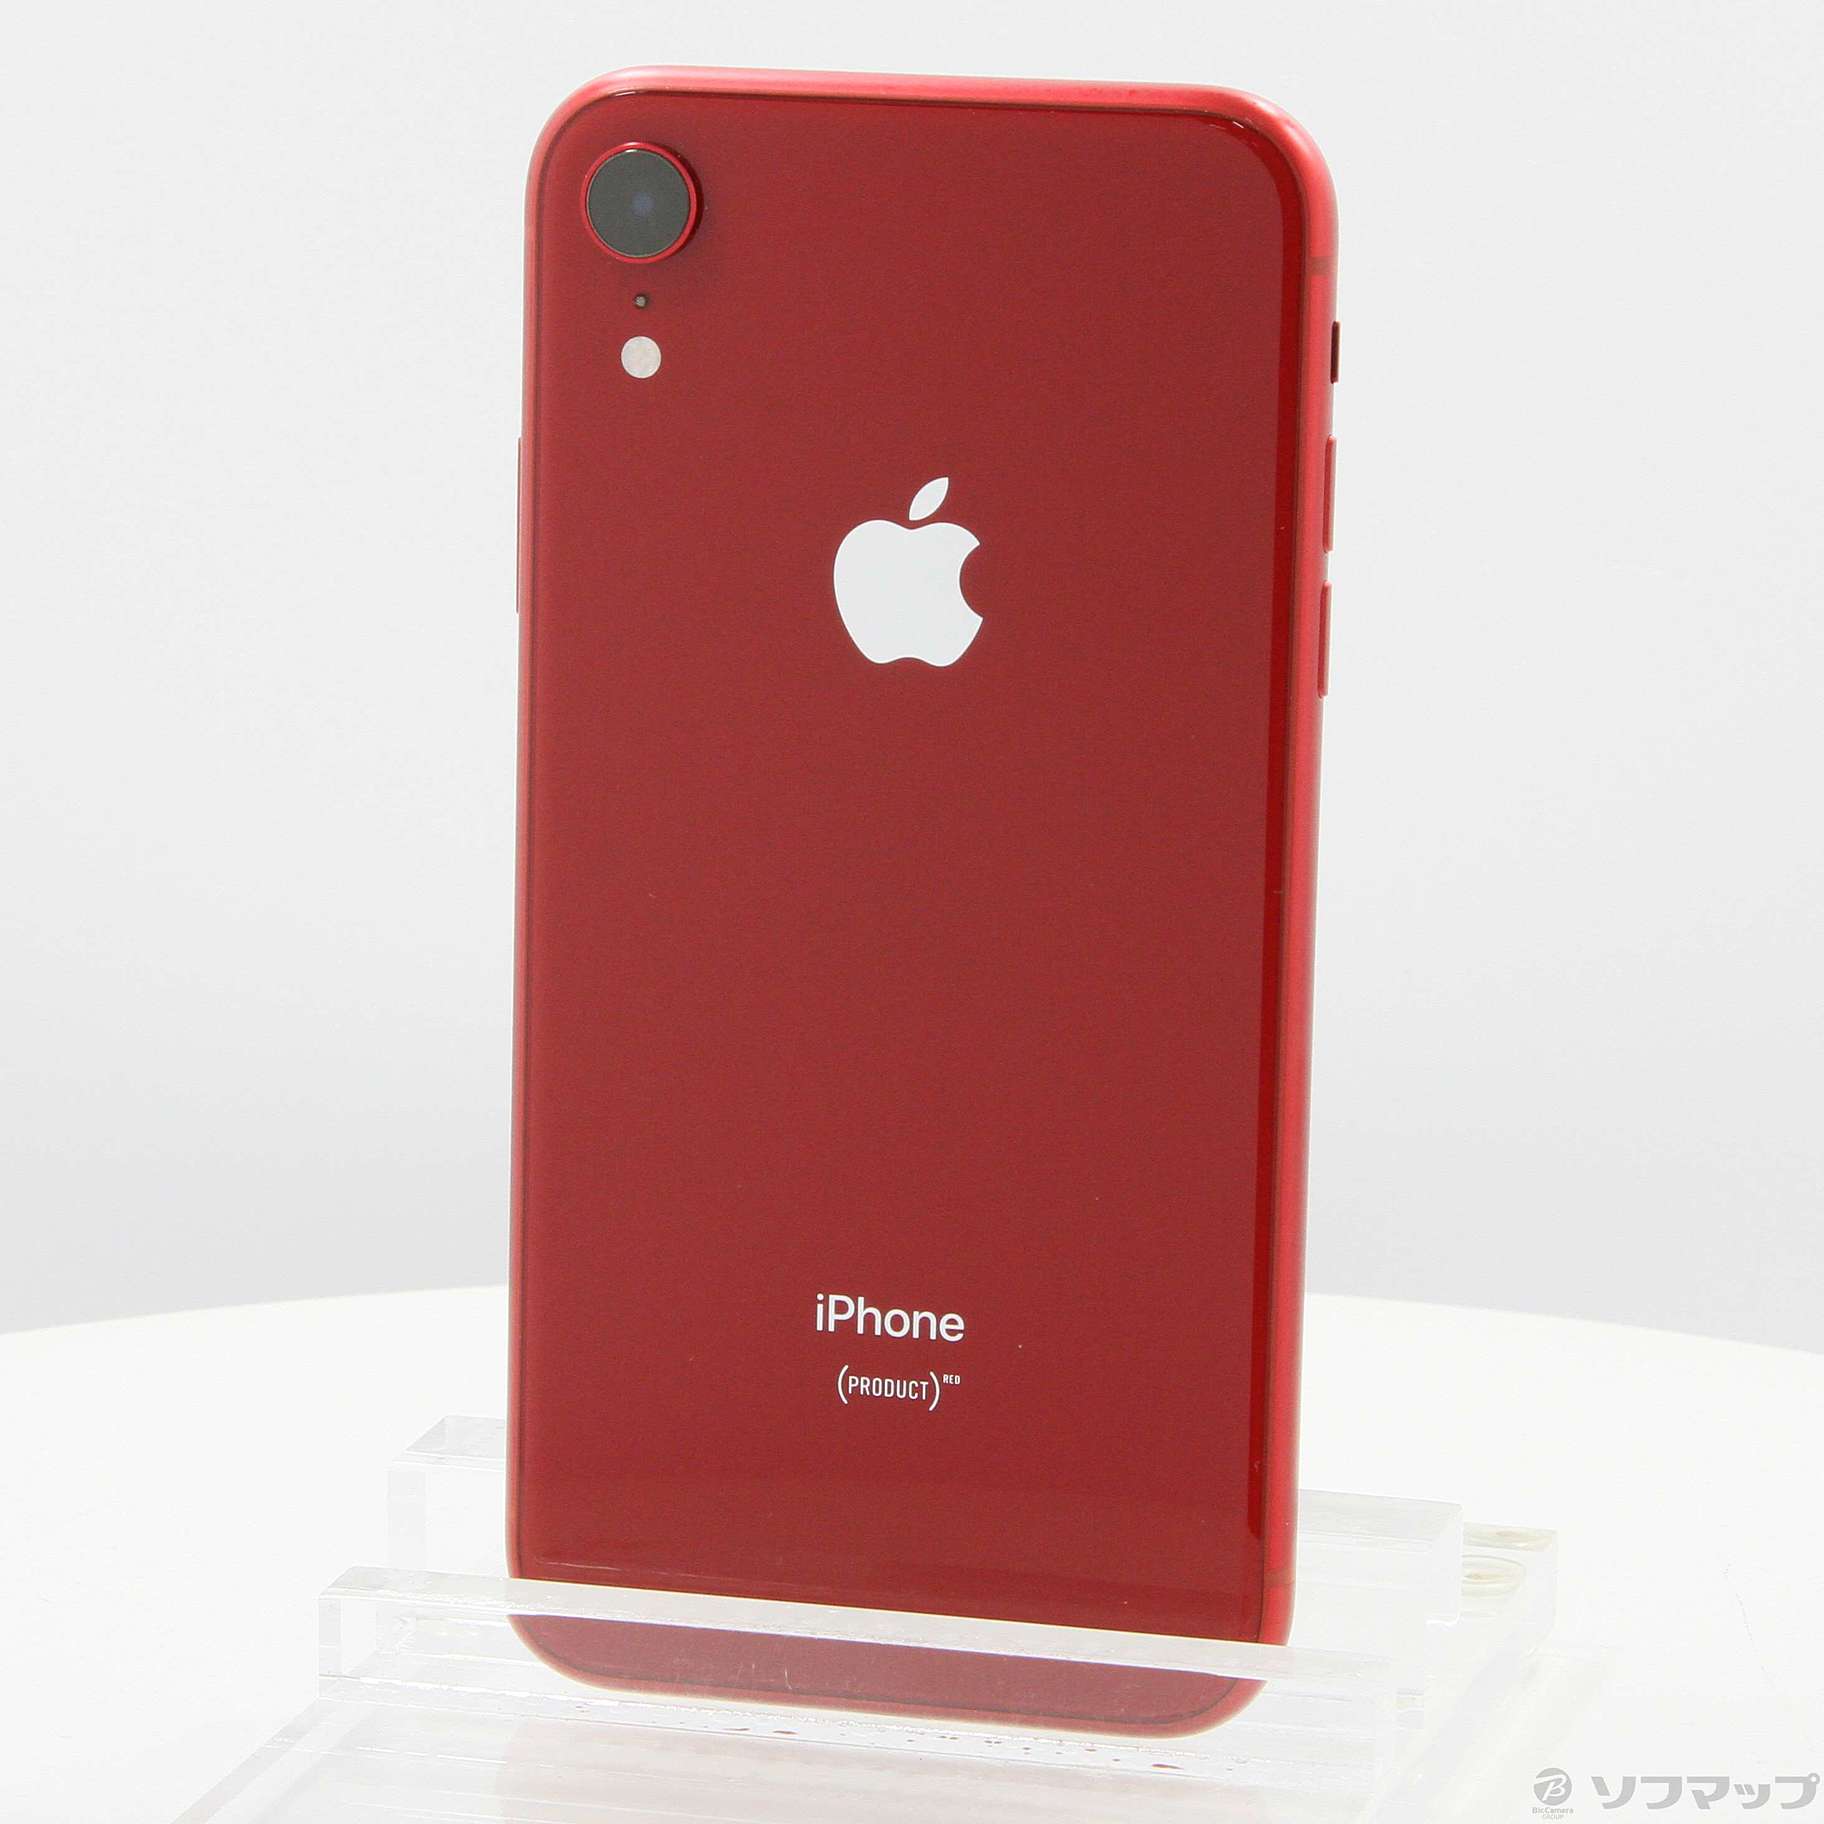 iPhoneXR 128GB Red プロダクトレッド 赤 - スマートフォン本体